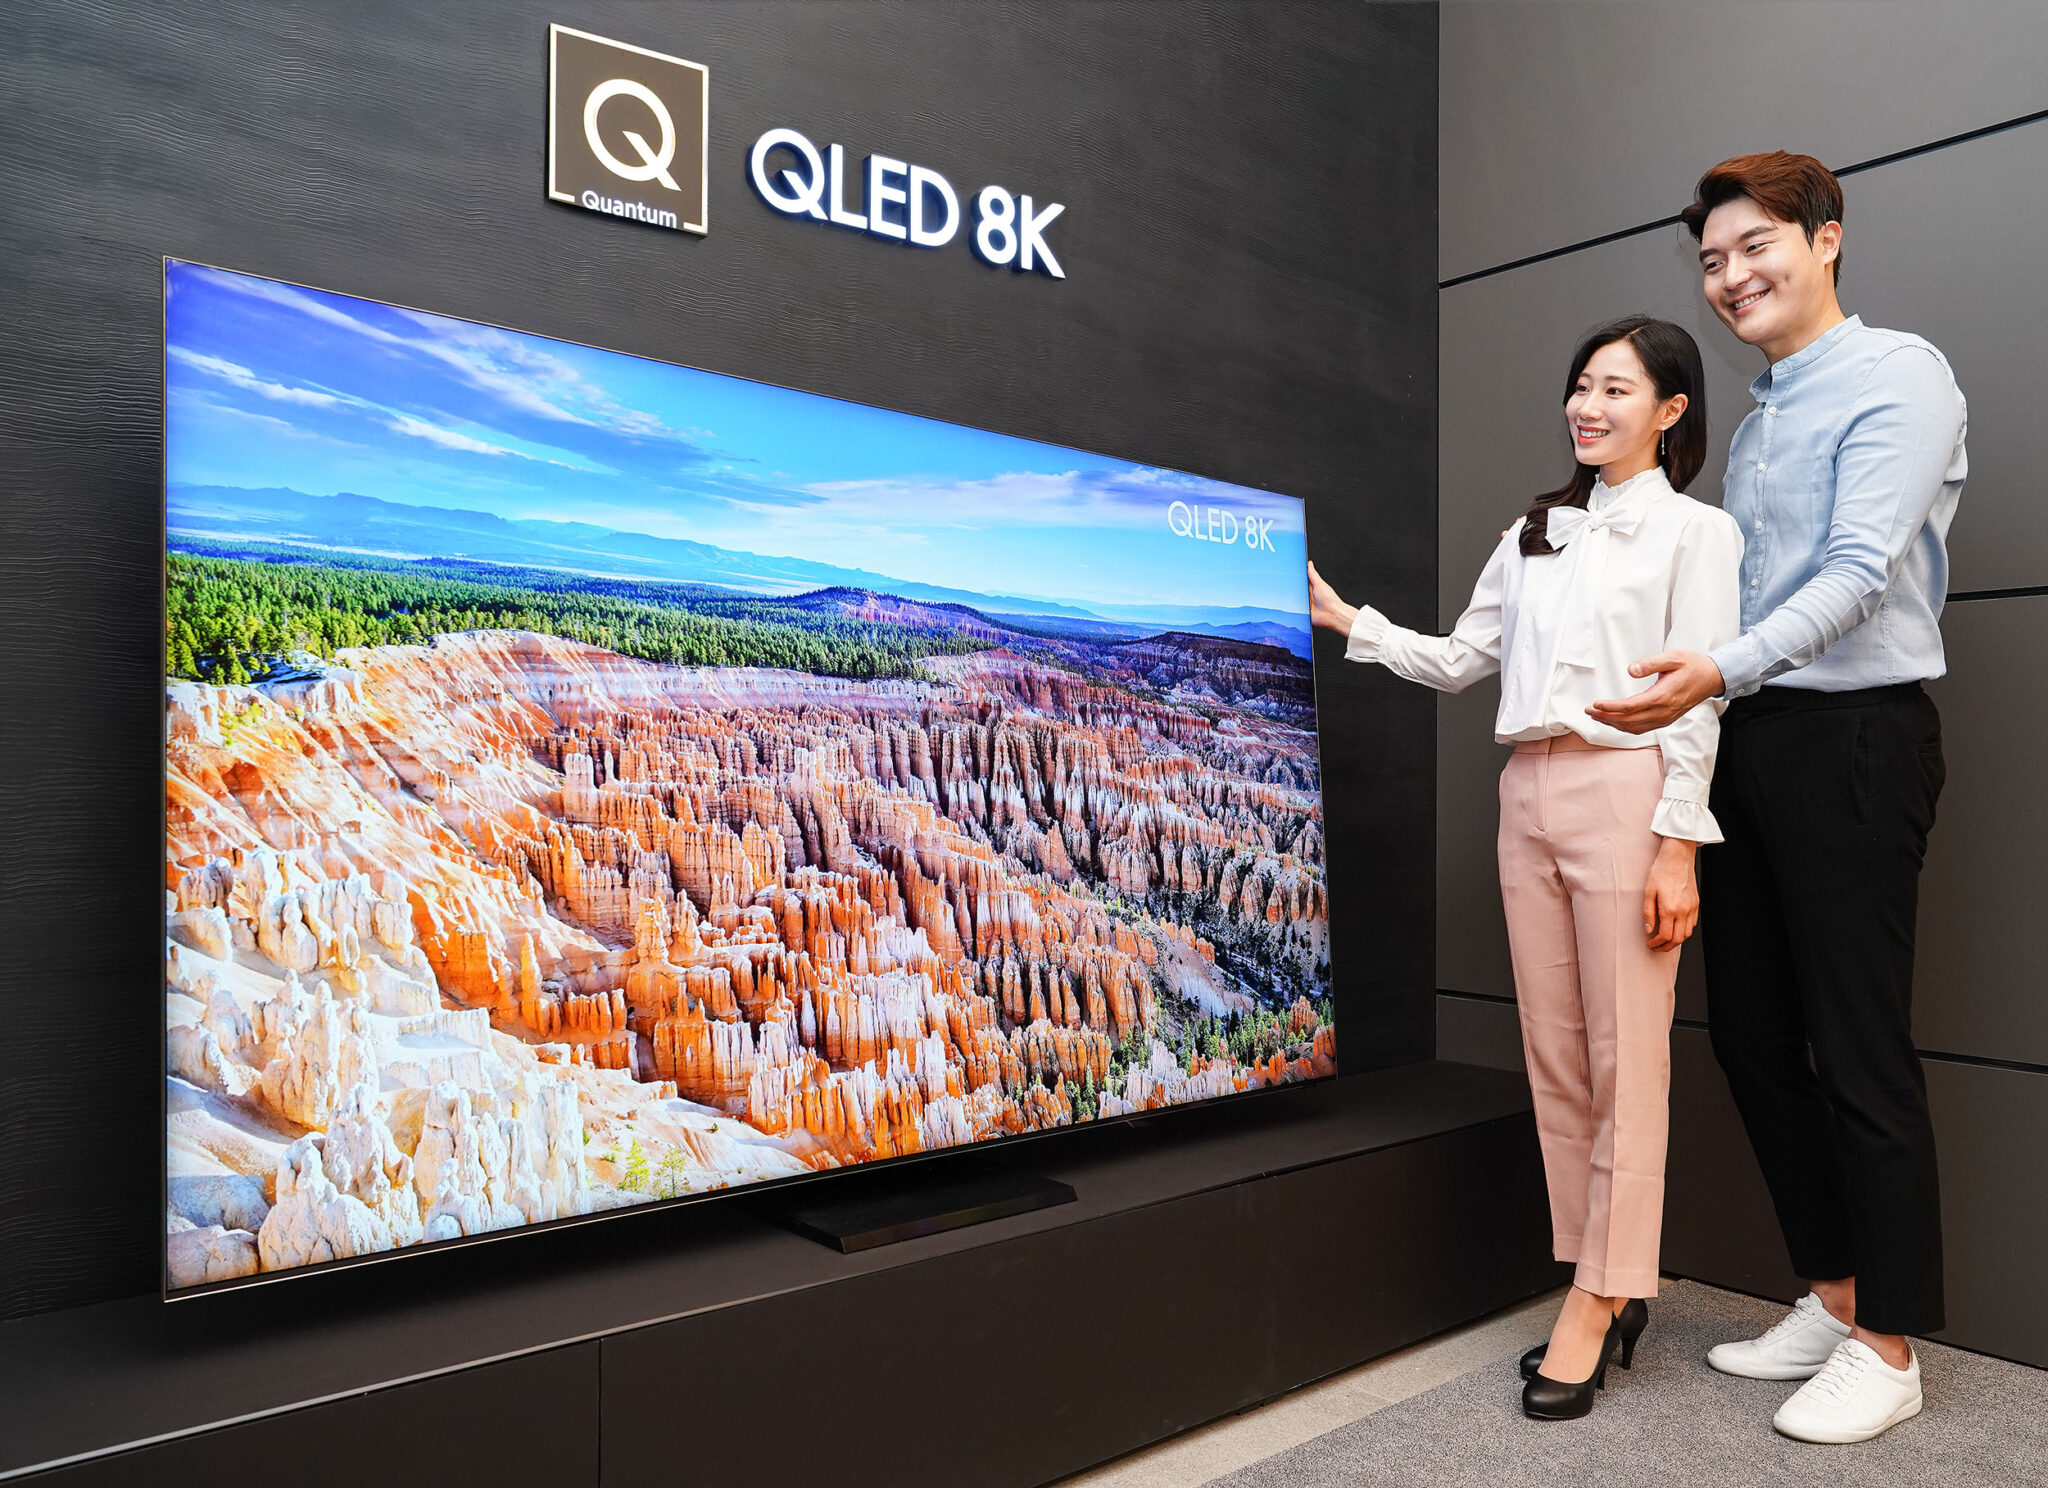 Samsung 8k купить. Телевизор Samsung QLED 8k. Телевизор самсунг QLED 8к. Телевизор Samsung QLED 8k 2020. Samsung QLED 8k 85 дюймов.